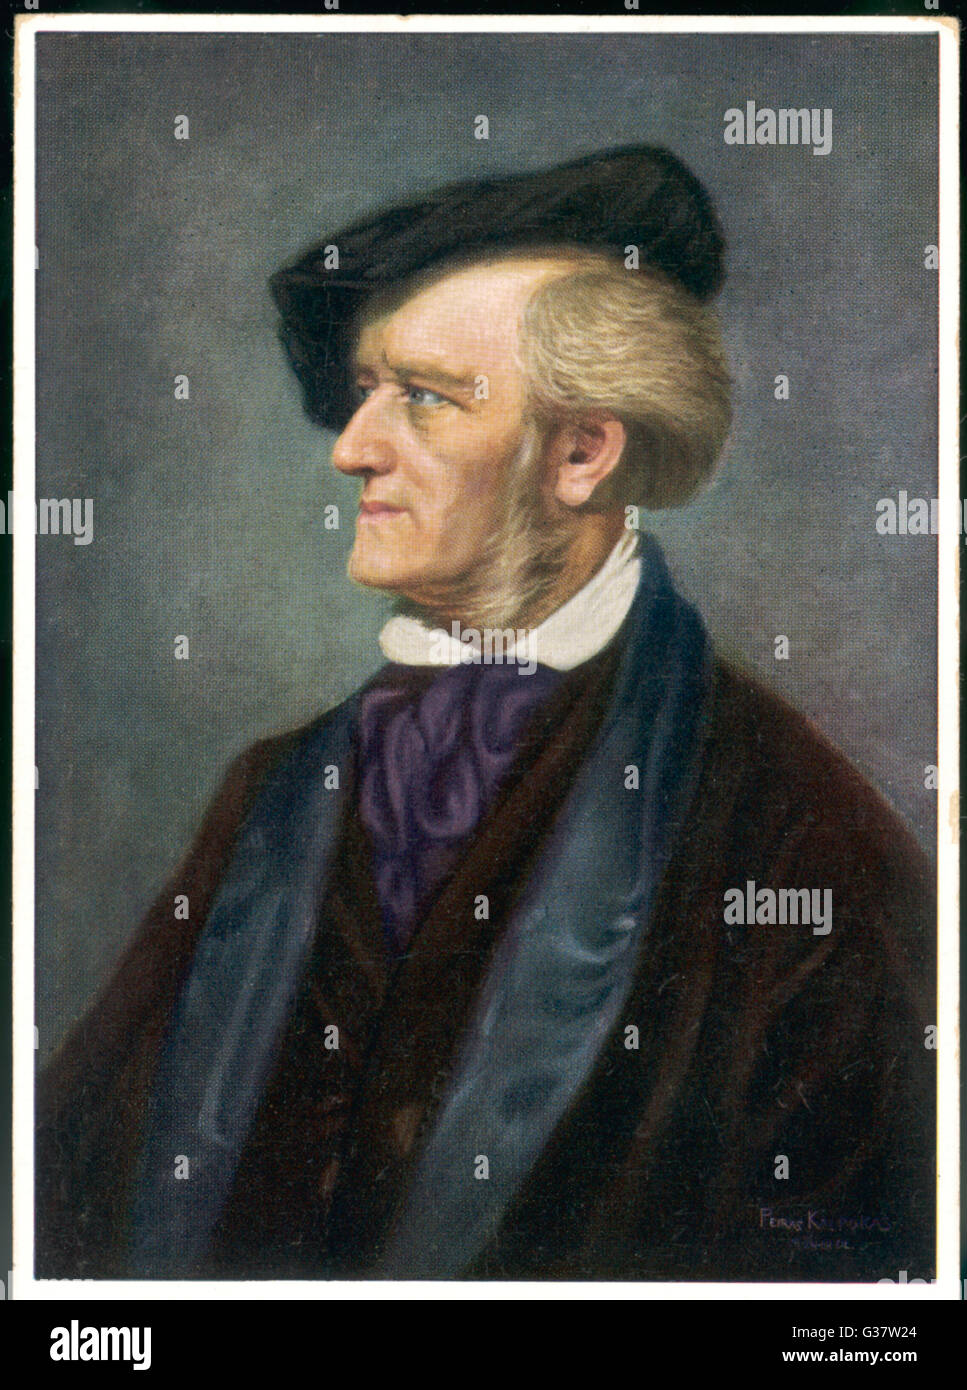 WILHELM RICHARD WAGNER  German composer        Date: 1813-1883 Stock Photo